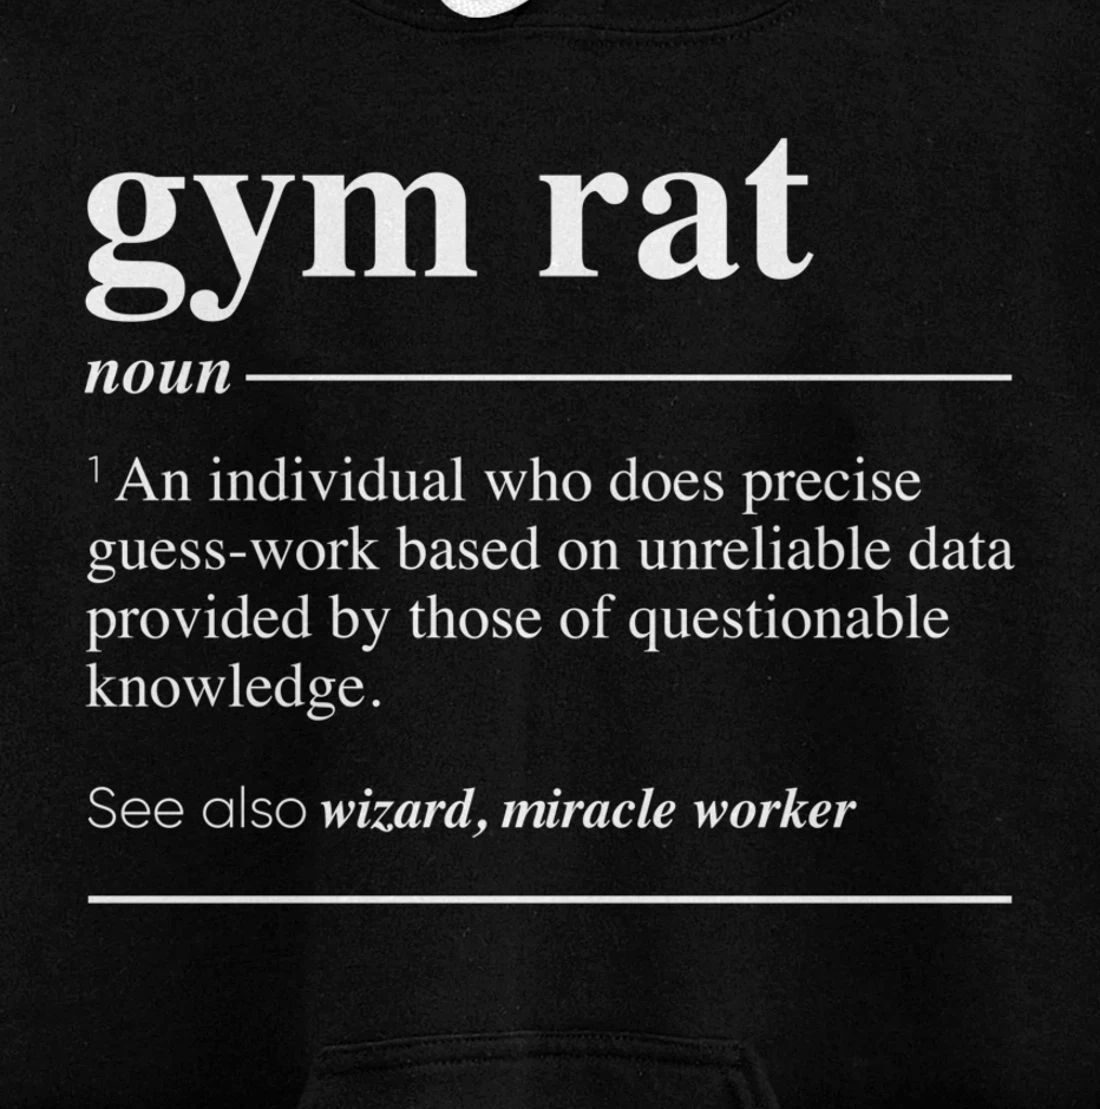 Gym girls >, Gymrat, gym rat meaning 